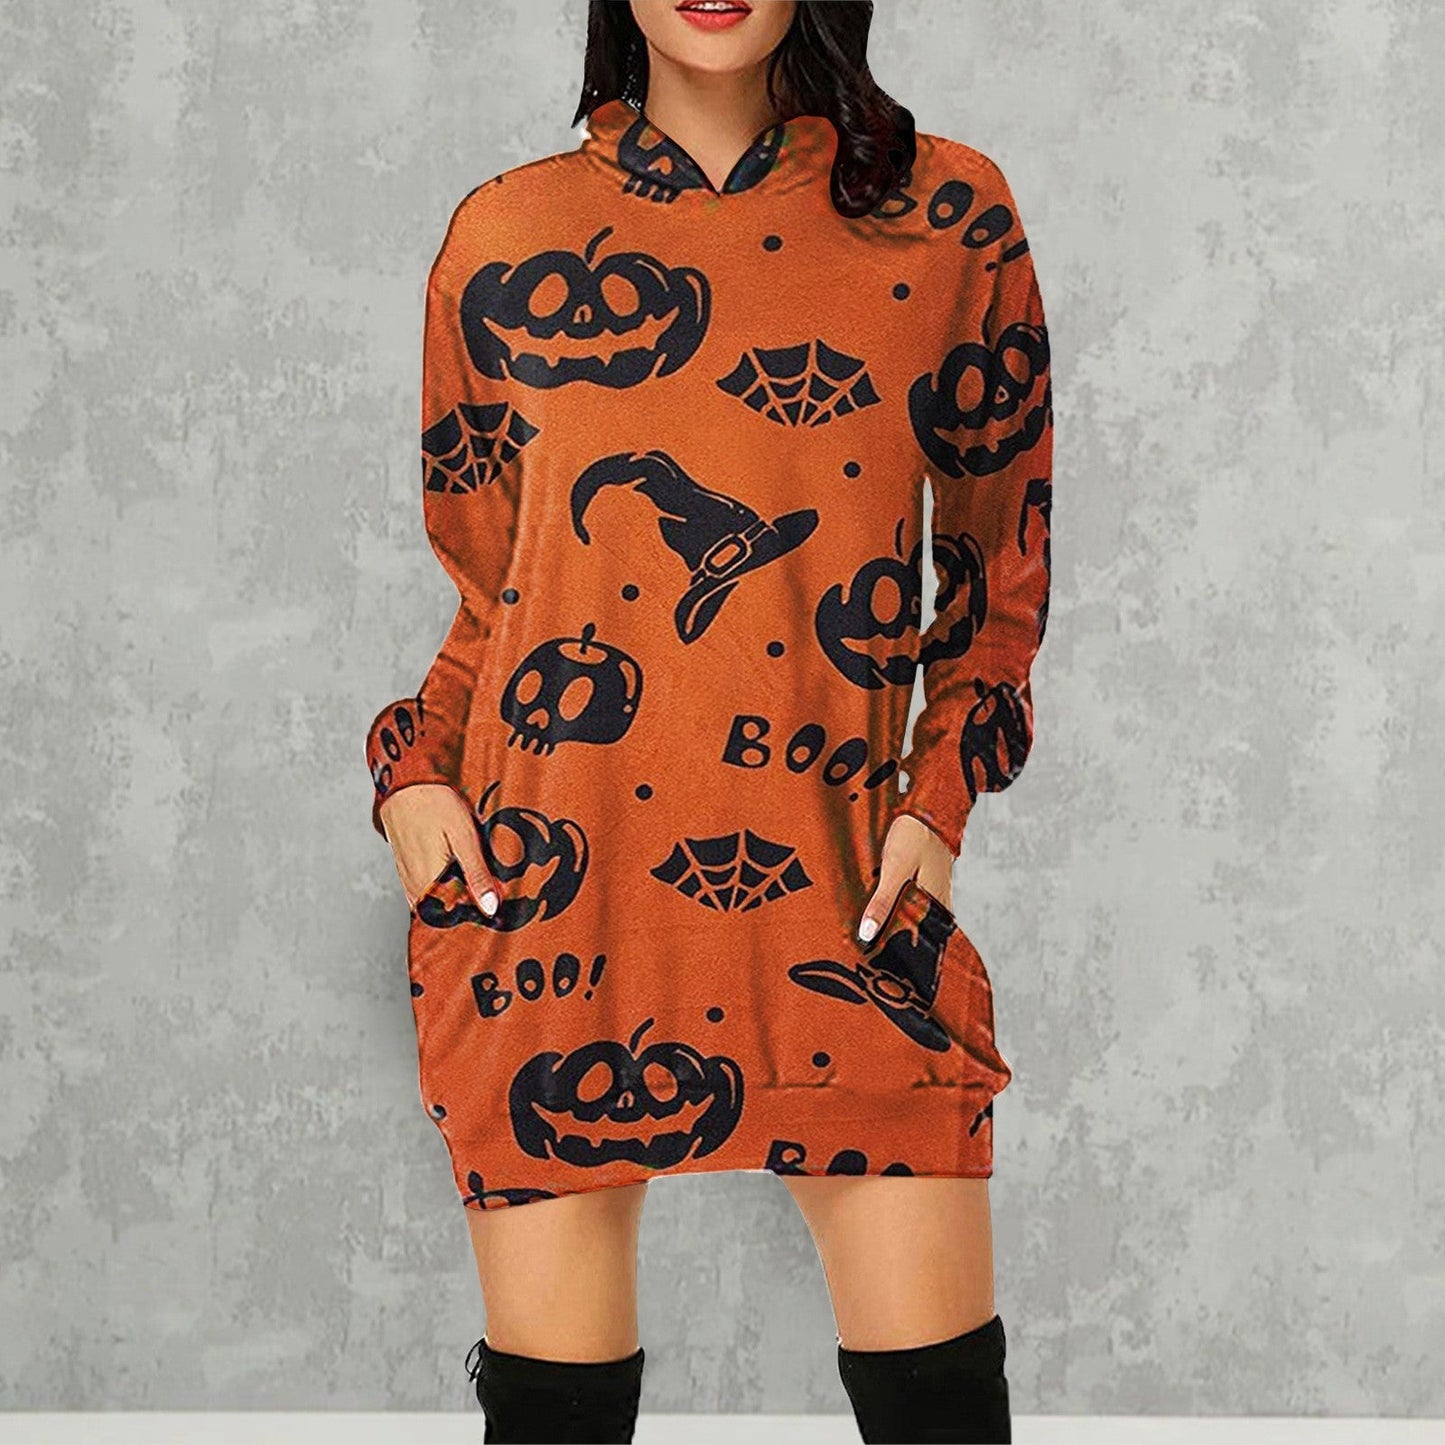 Halloween Pumpkin Design Long Sleeves Hoodies for Women-Orange Pumplin-S-Free Shipping at meselling99